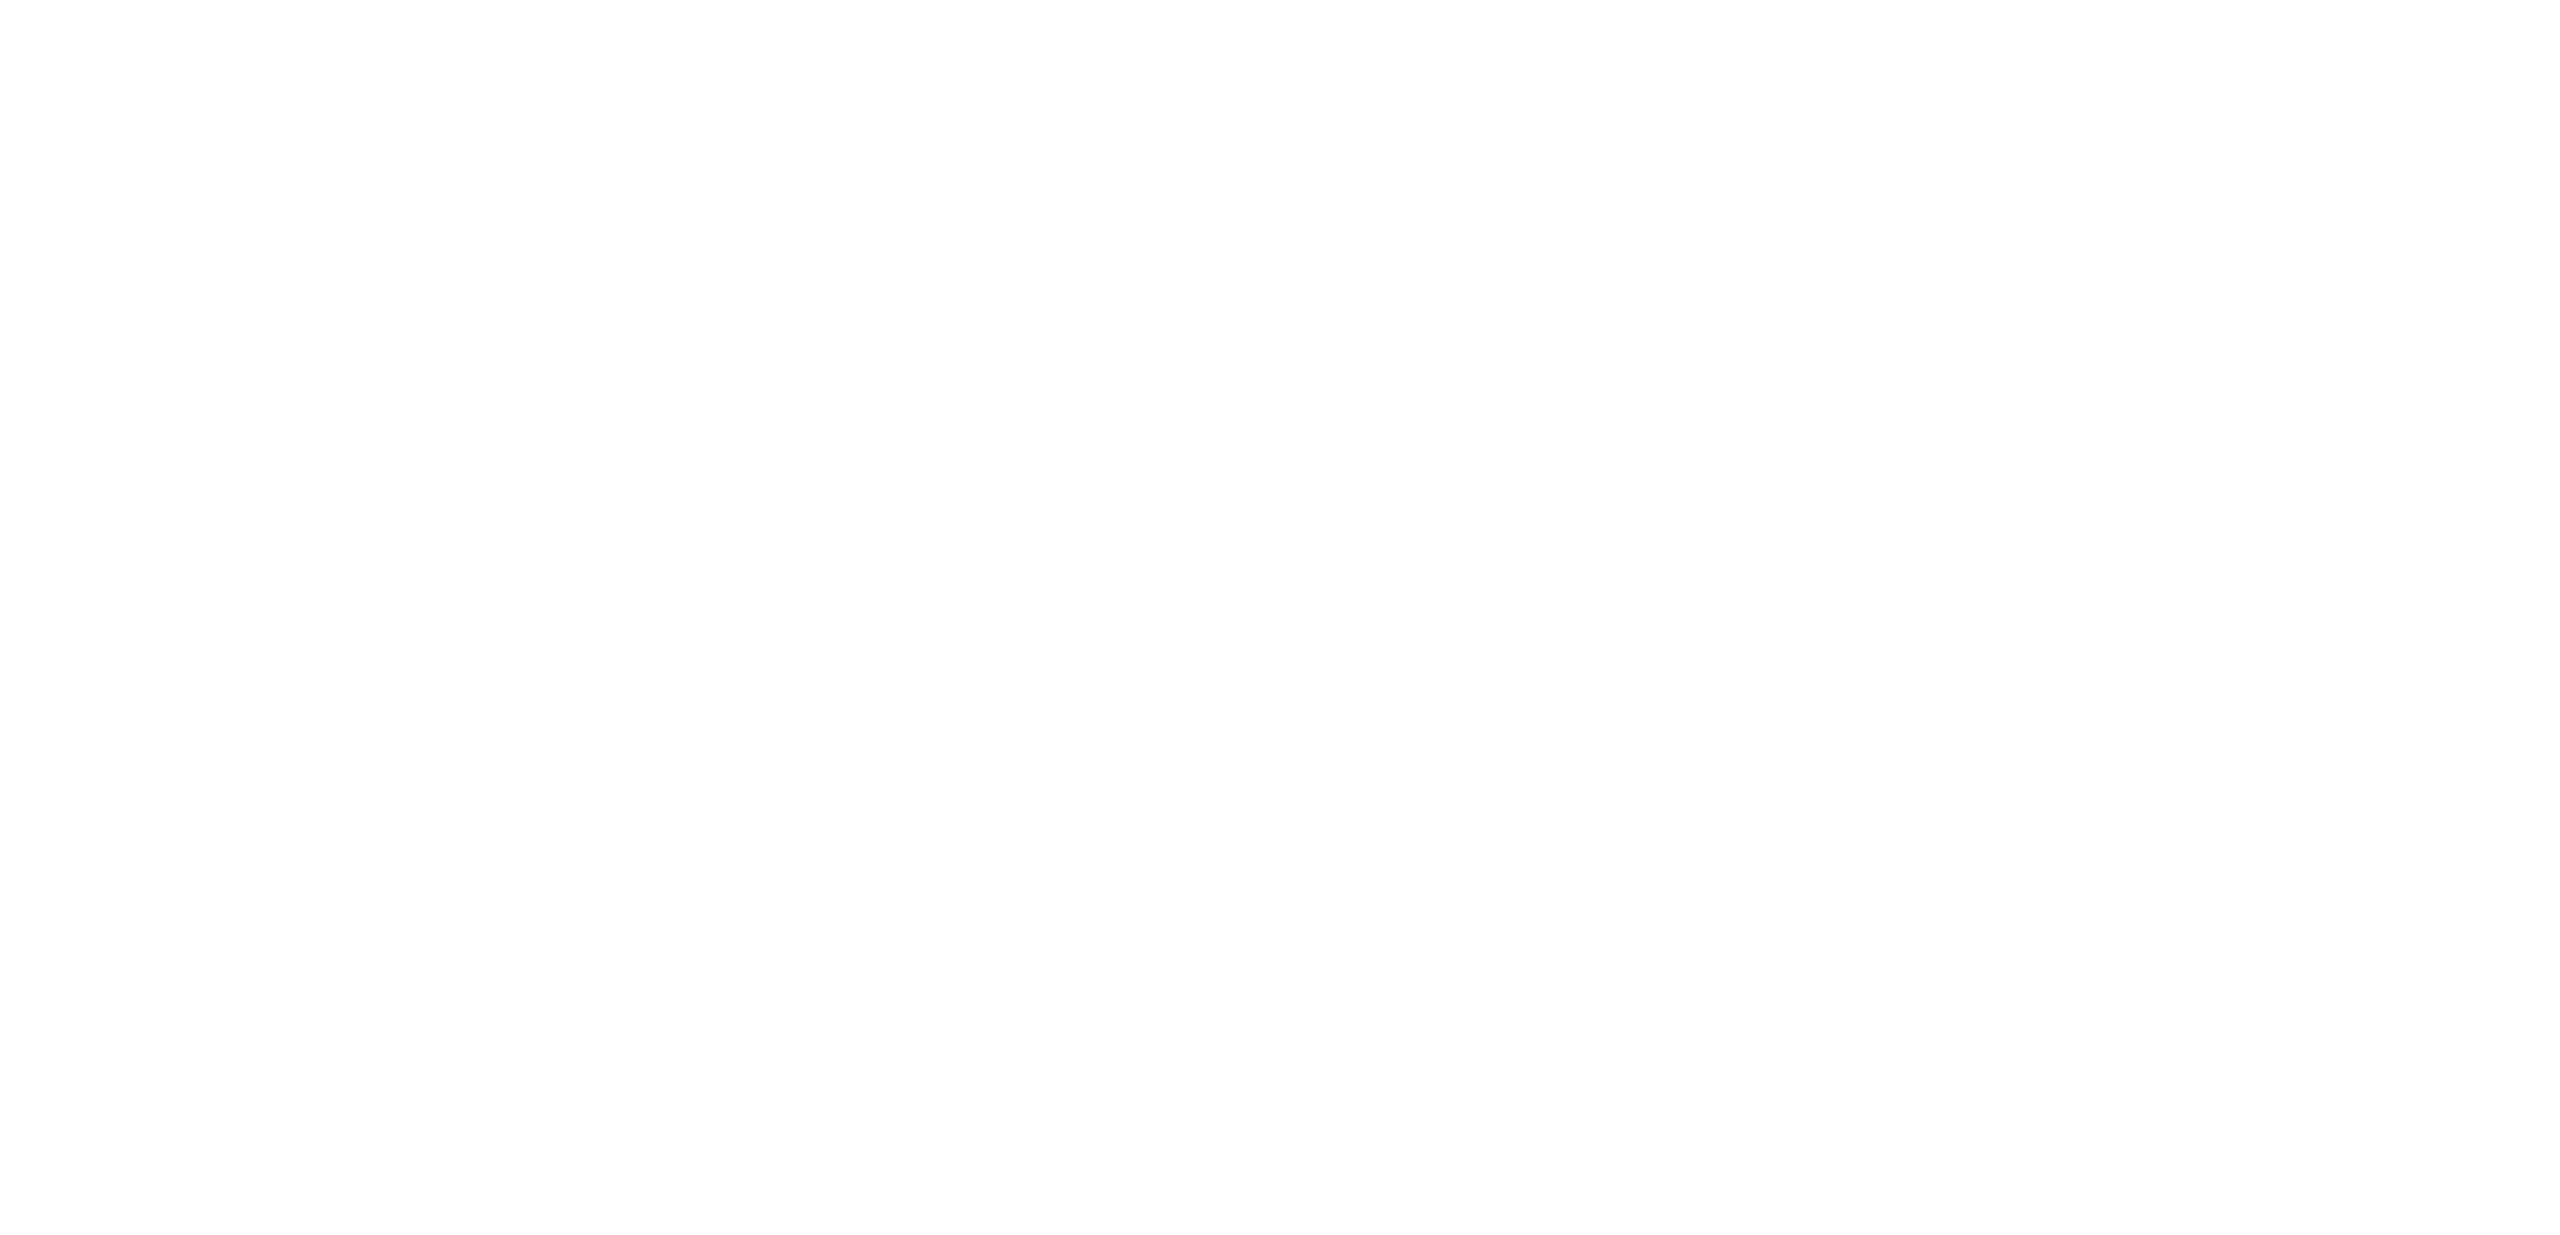 snapper